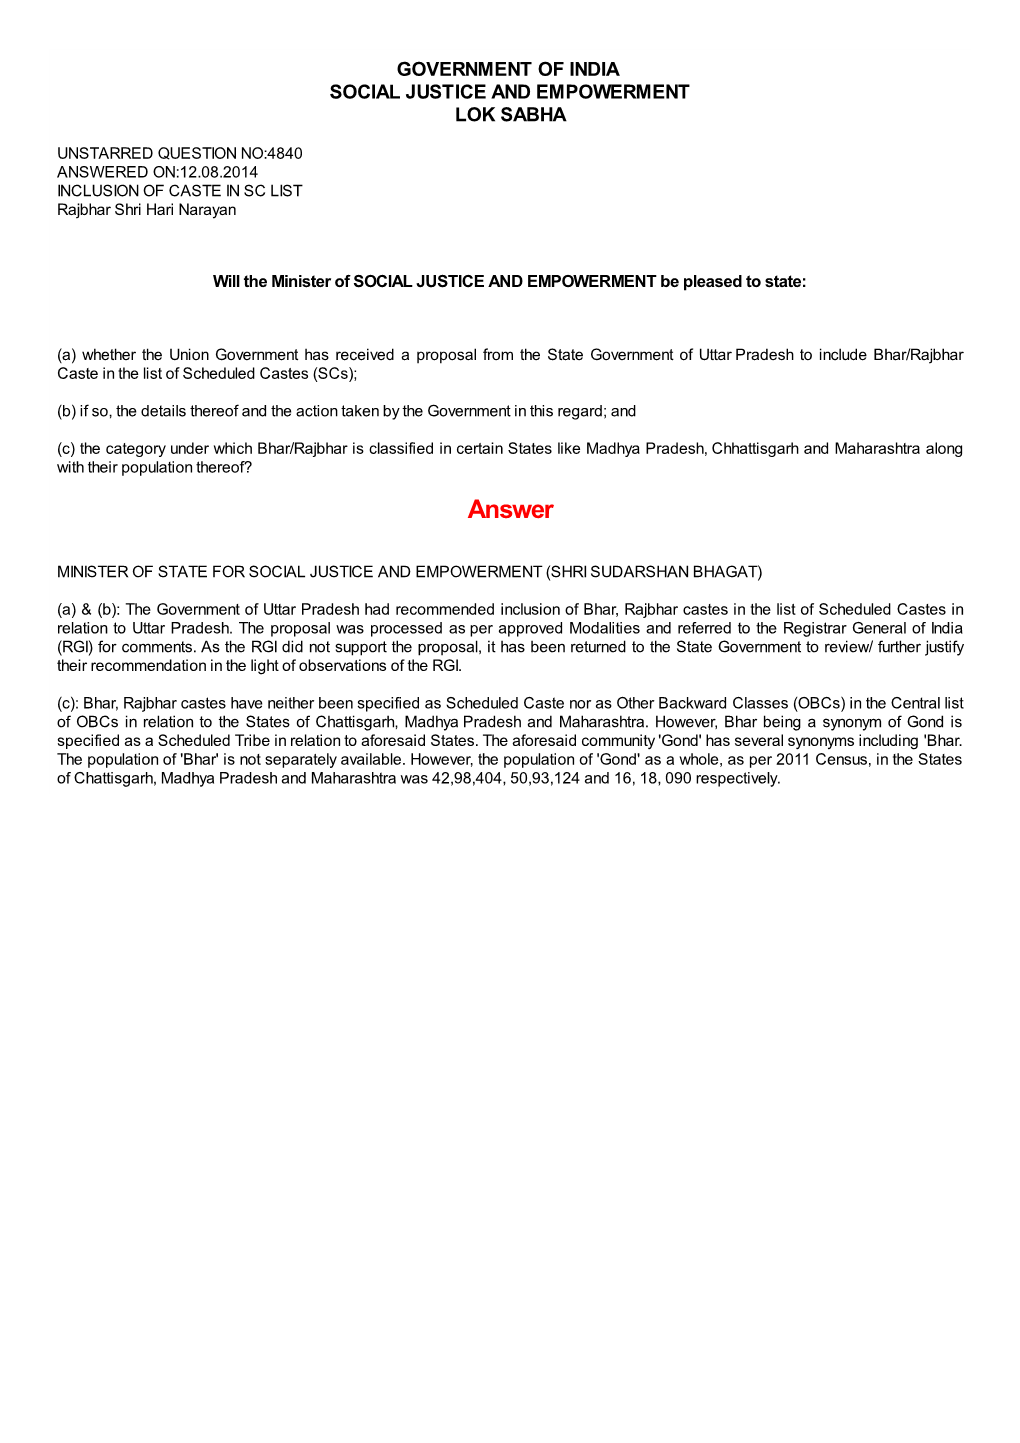 ANSWERED ON:12.08.2014 INCLUSION of CASTE in SC LIST Rajbhar Shri Hari Narayan